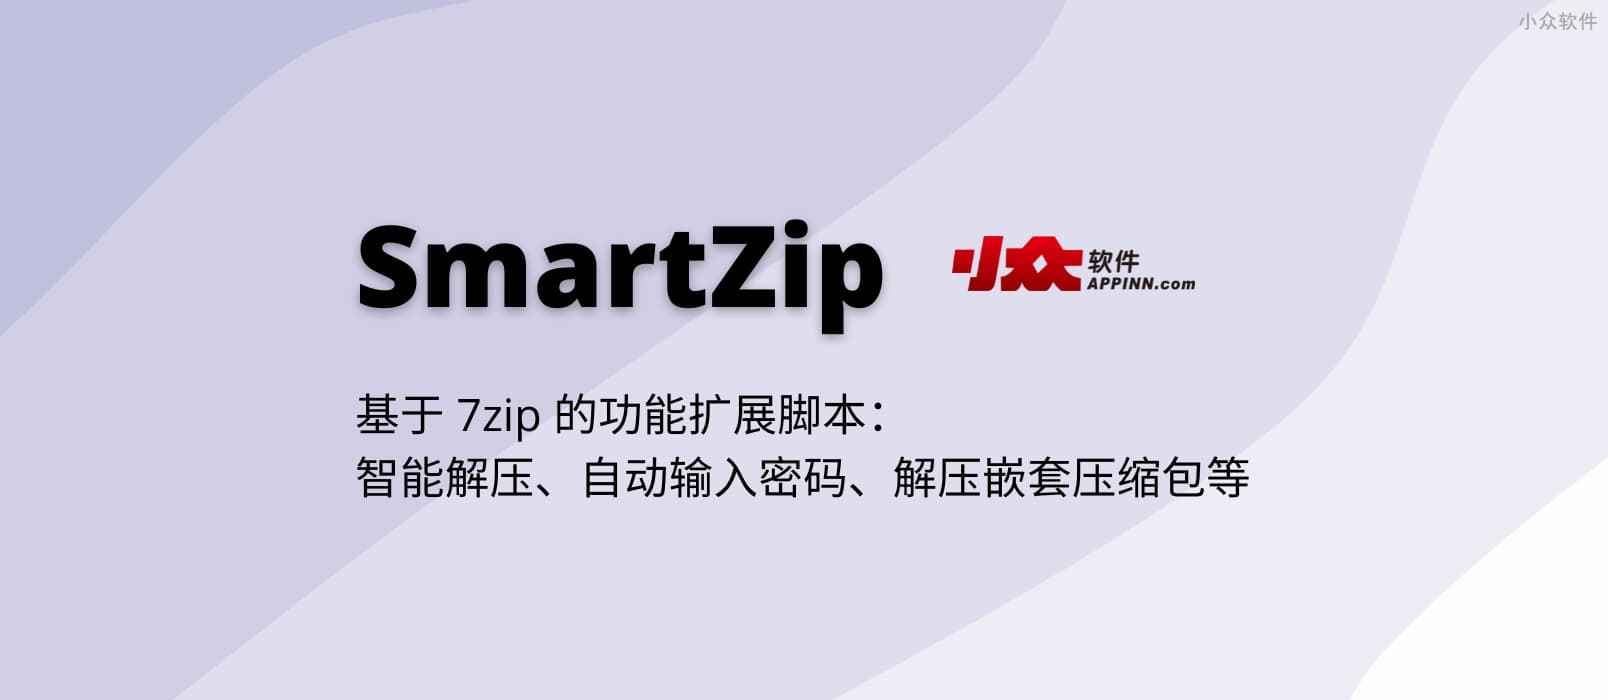 SmartZip – 基于 7zip 的功能扩展脚本：智能解压、自动输入密码、解压嵌套压缩包等